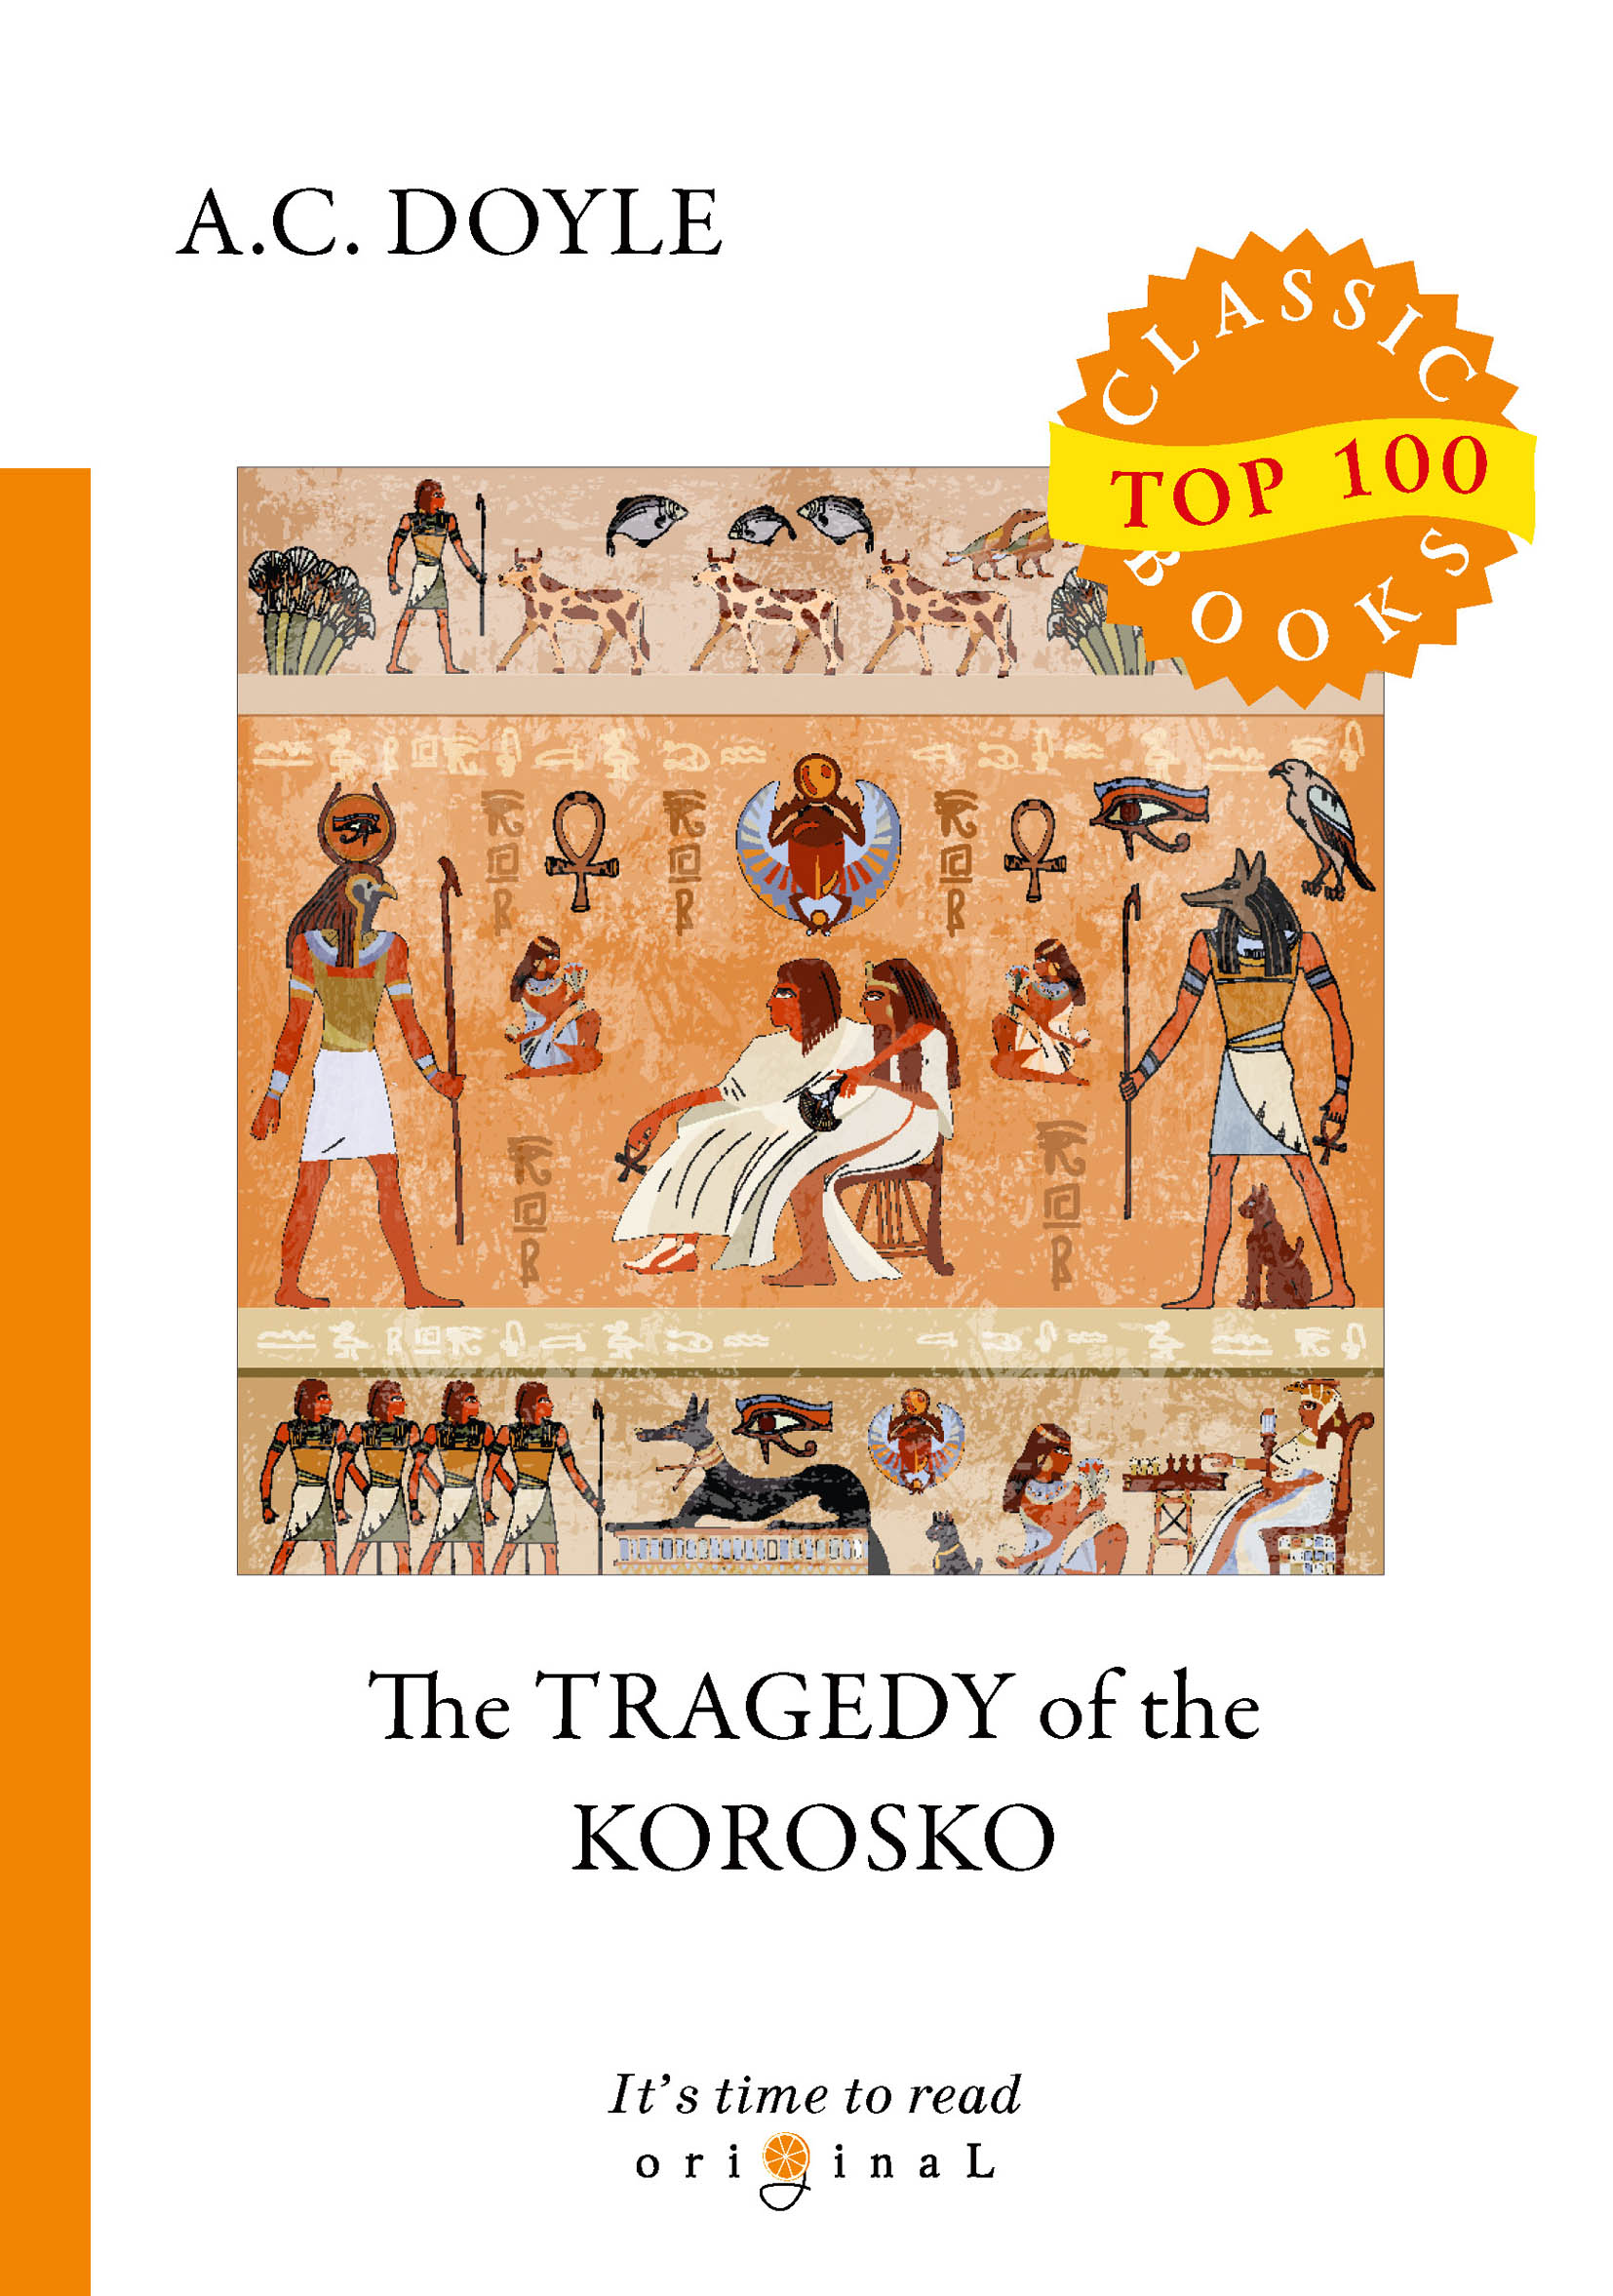 The Tragedy of The Korosko